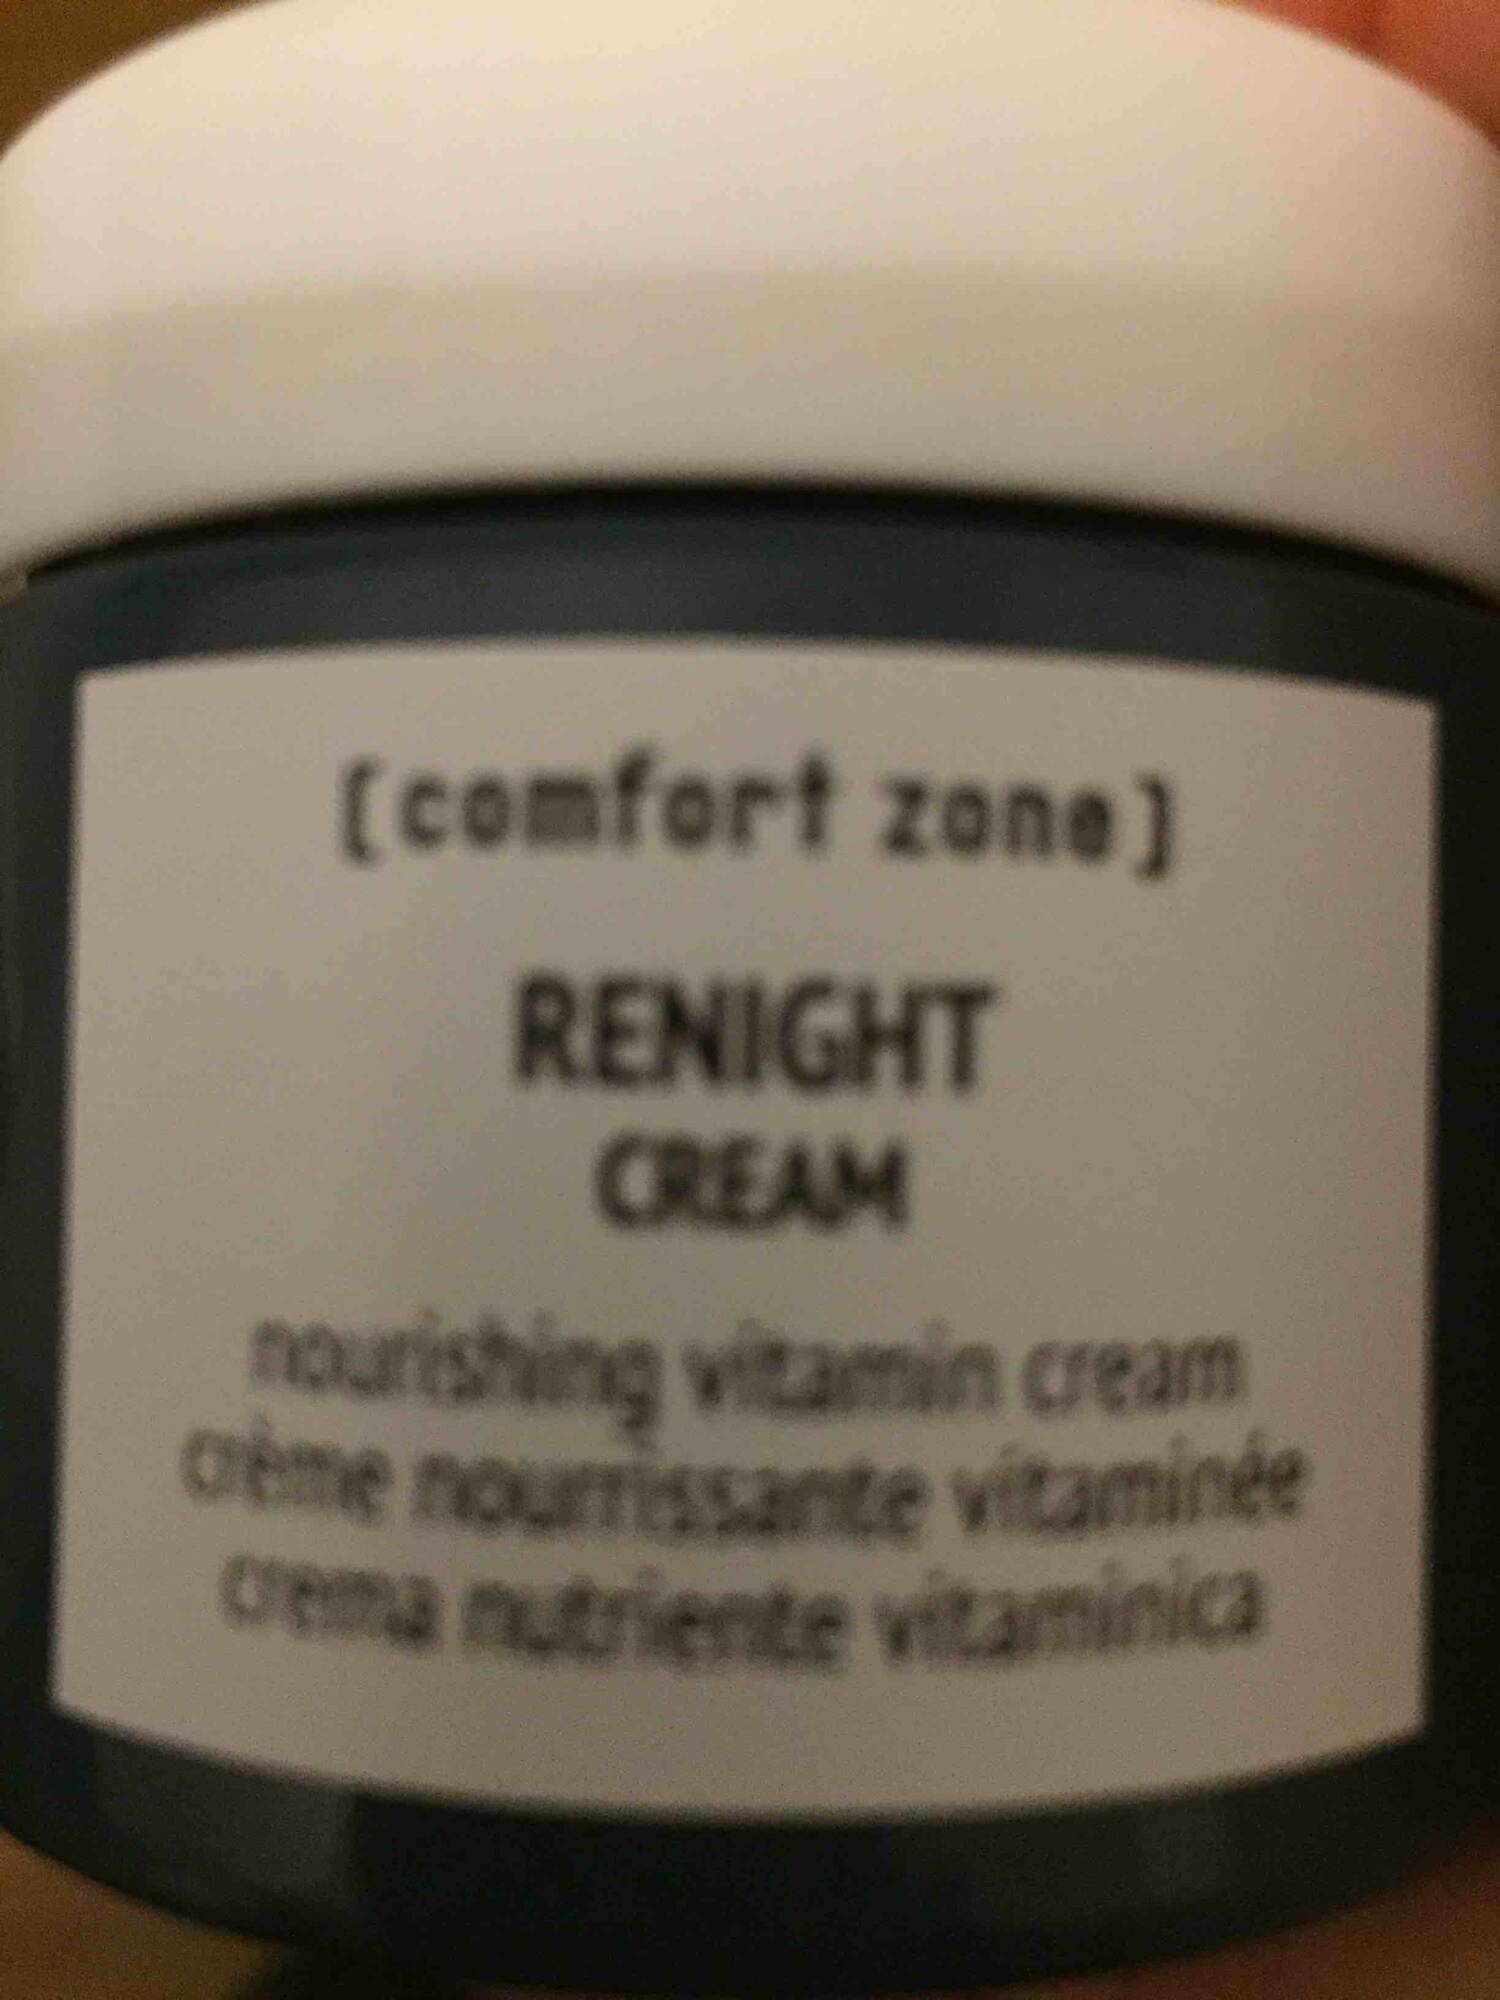 COMFORT ZONE - Renight cream - Crème nourrissante vitaminée